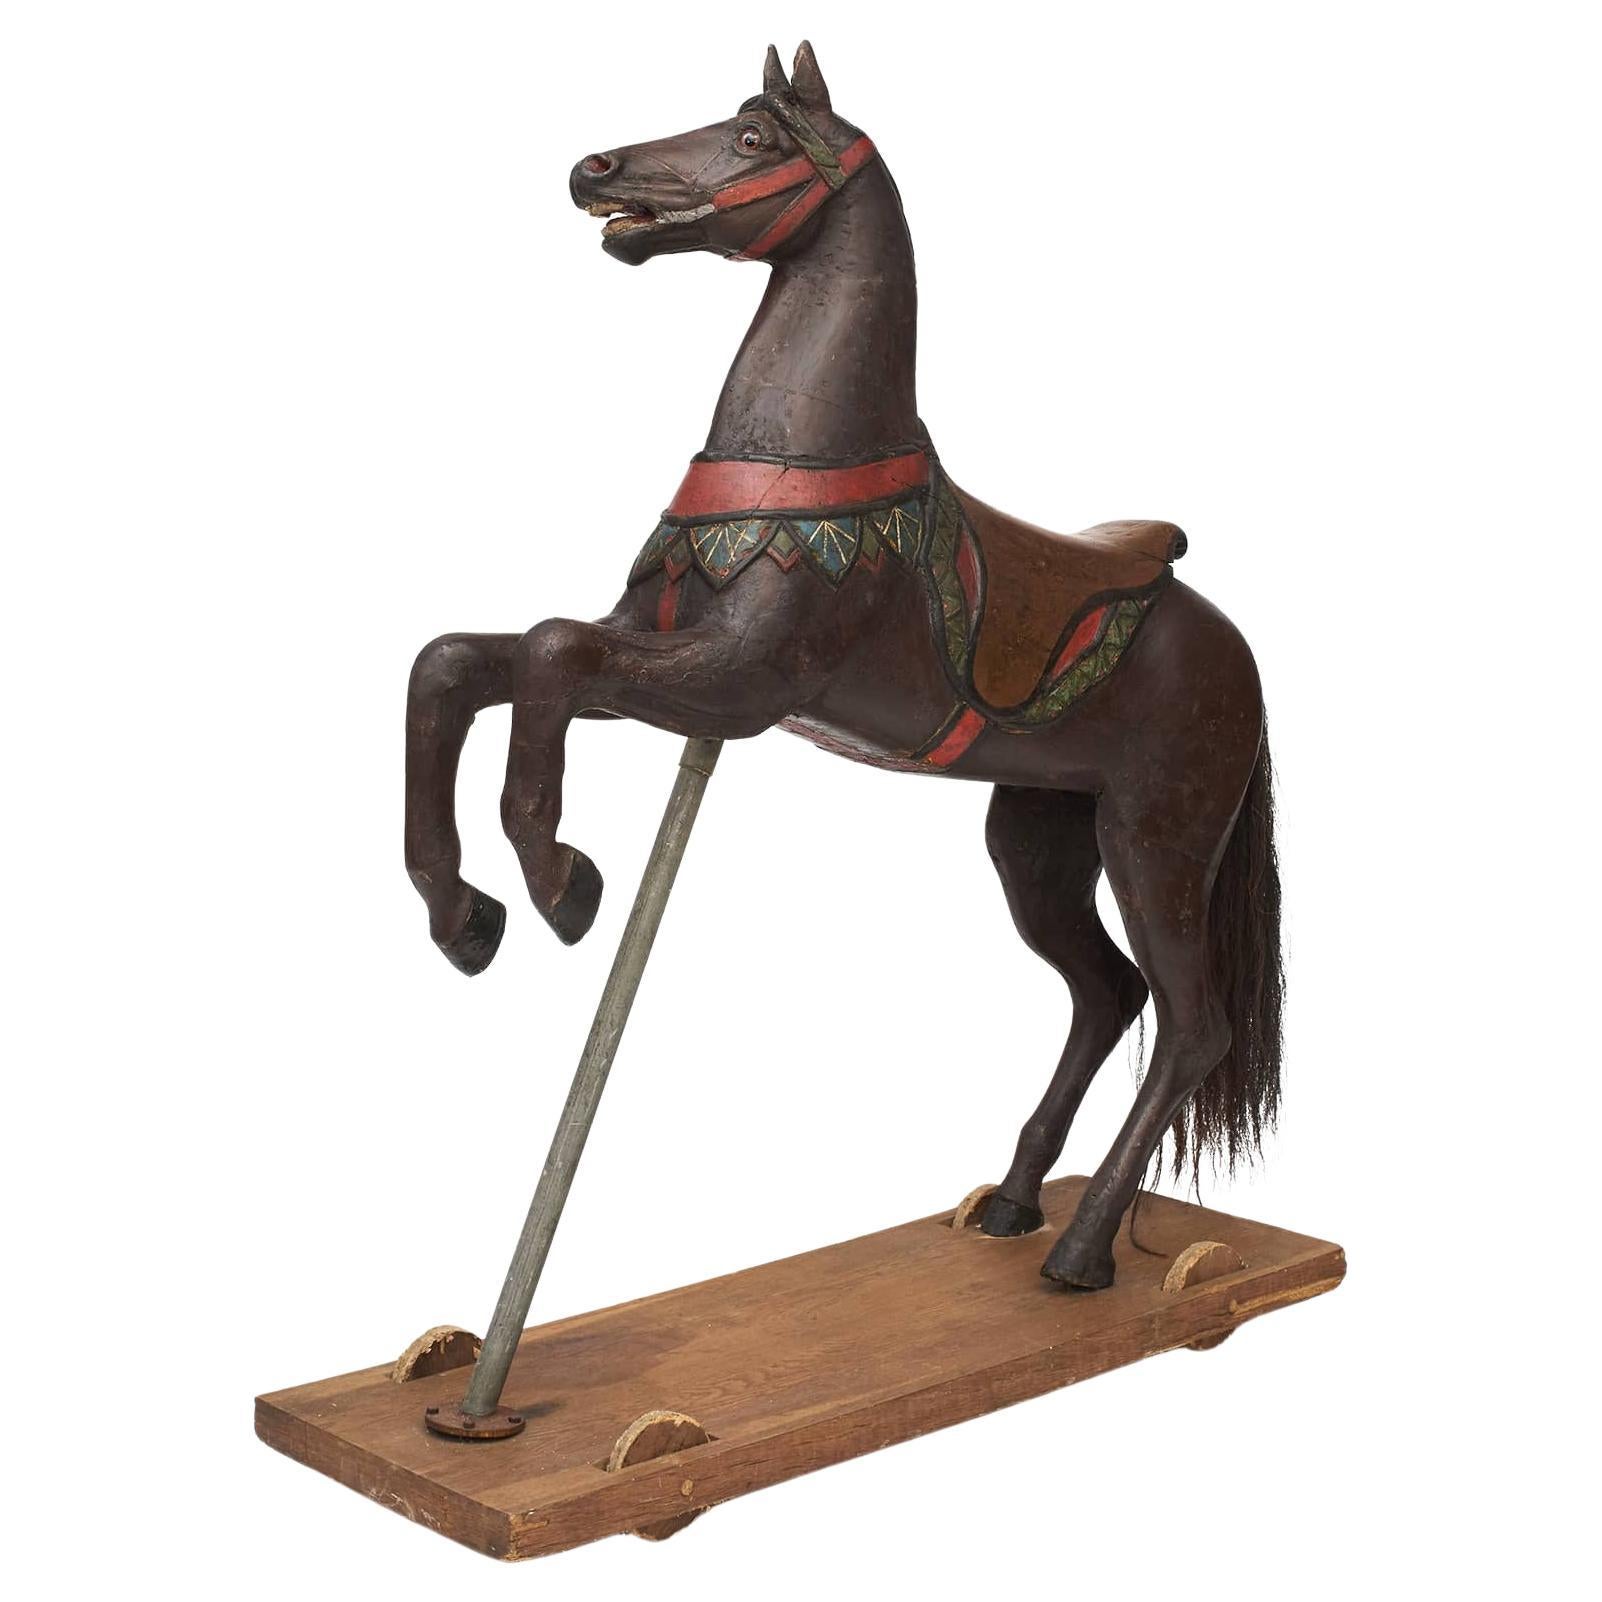 Wooden "Tivoli" Carousel Horse, 1840-1850 For Sale at 1stDibs